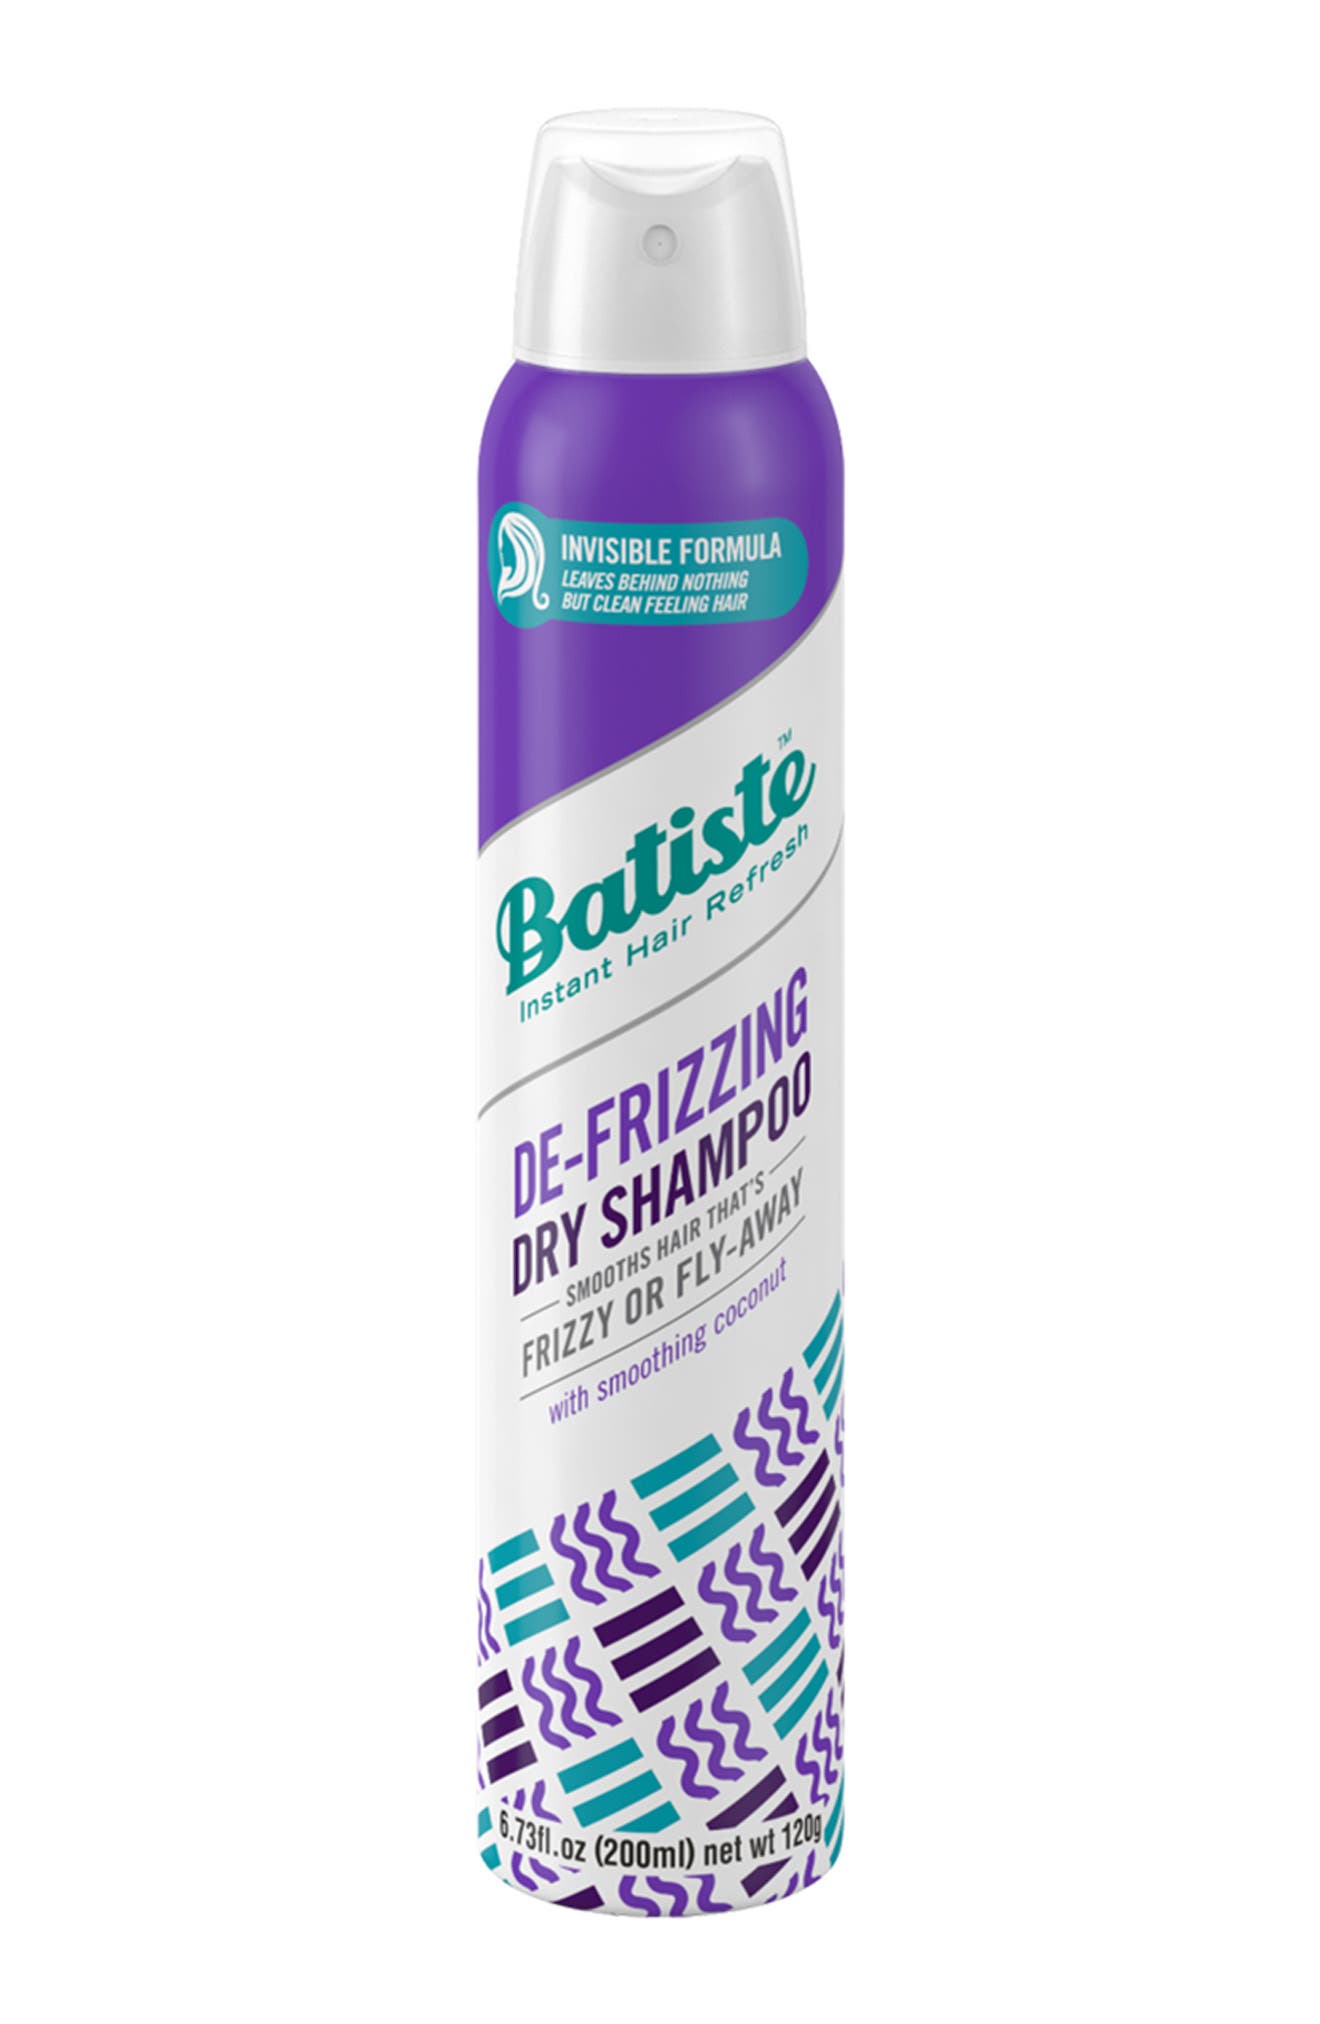 De-Frizzing Dry Shampoo - 6.73 fl. oz. Batiste